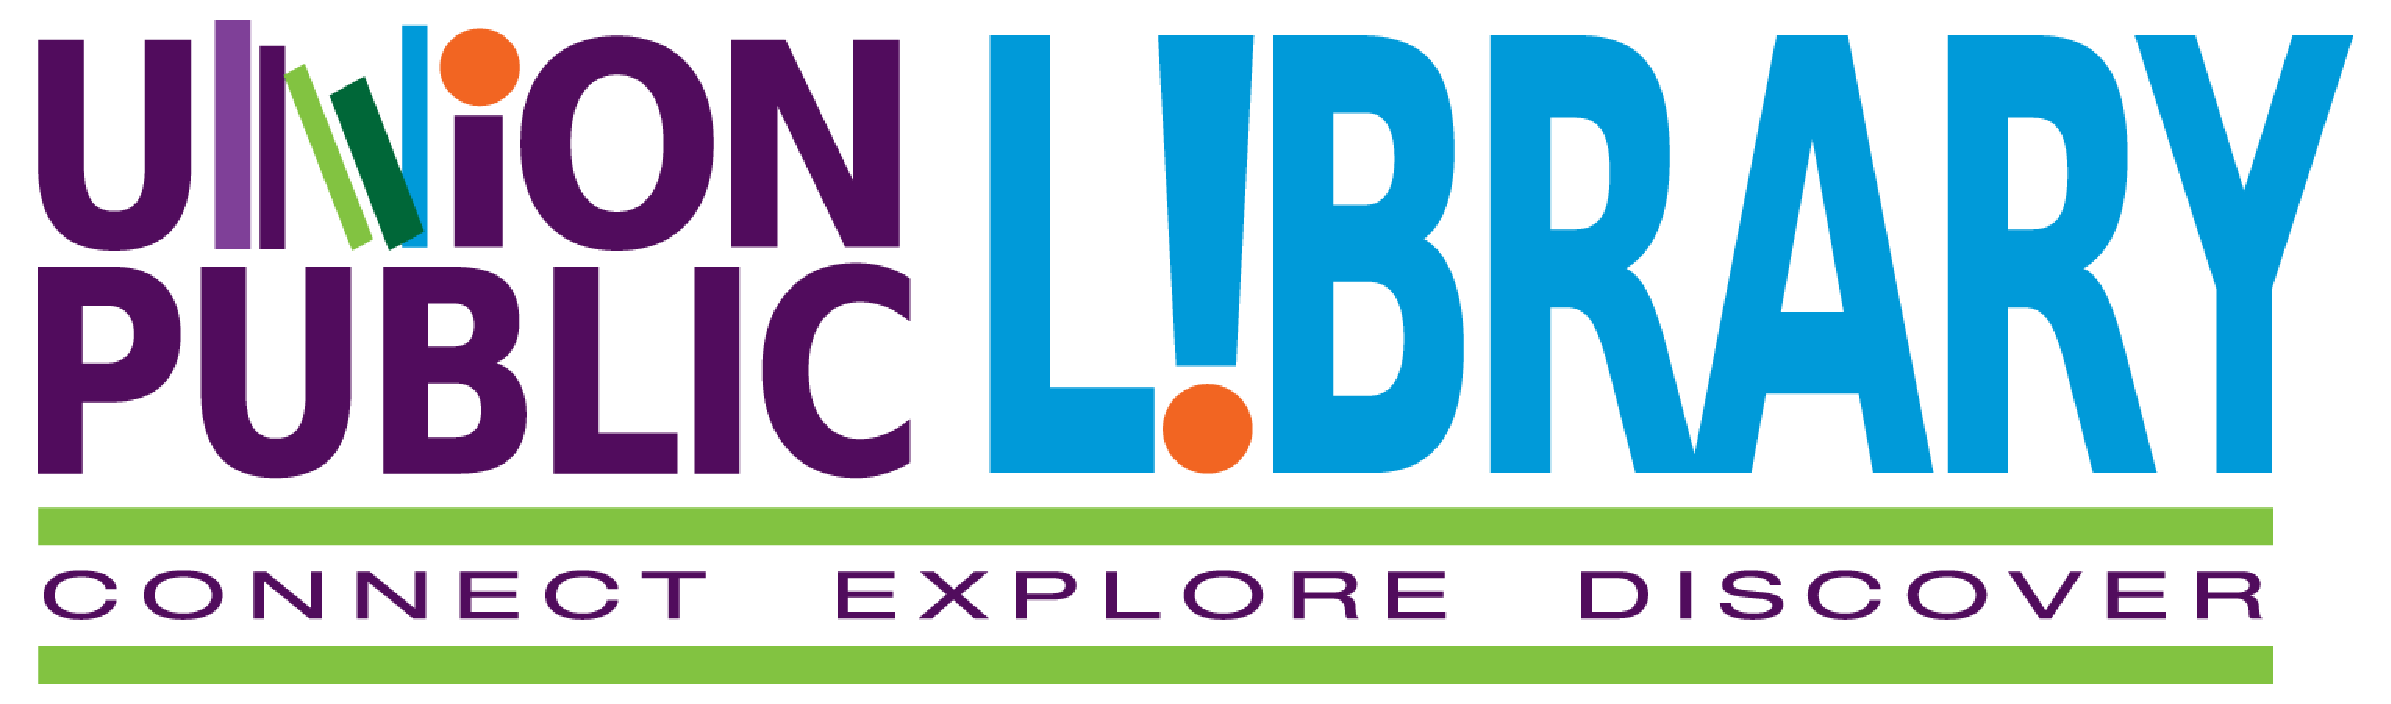 Union Public Library Logo